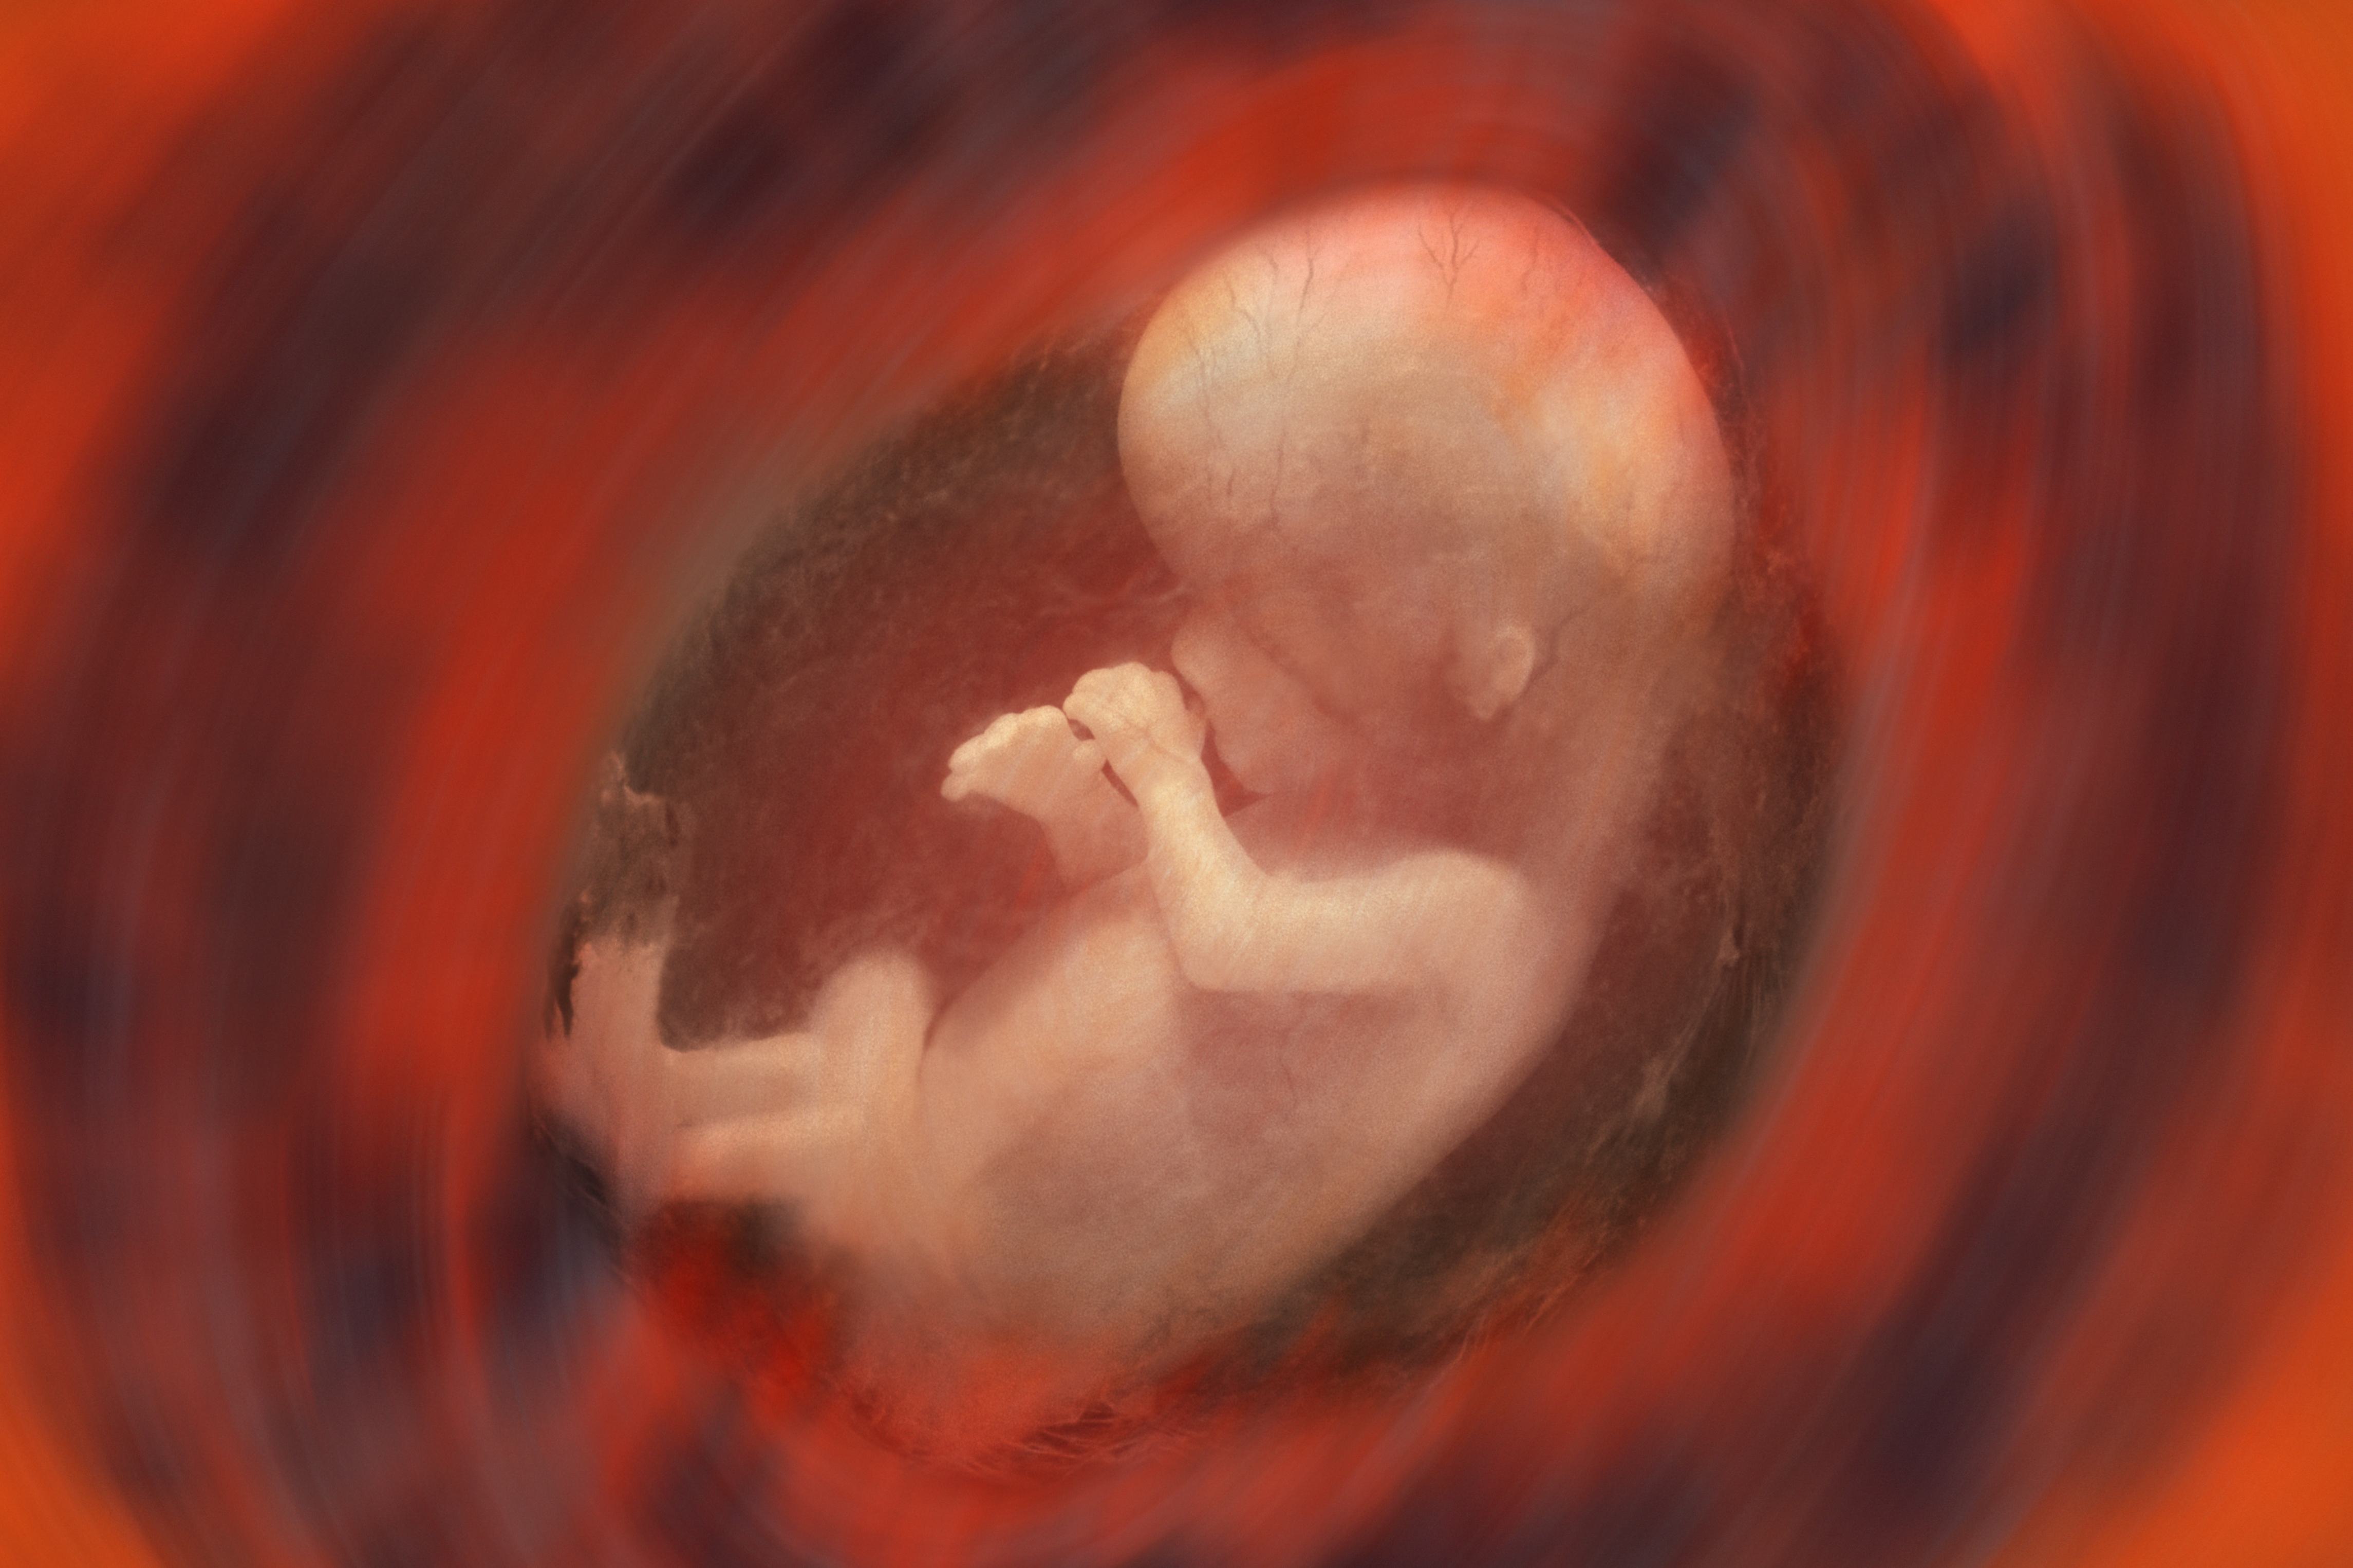 De dubbele agenda van de pro-abortuslobby